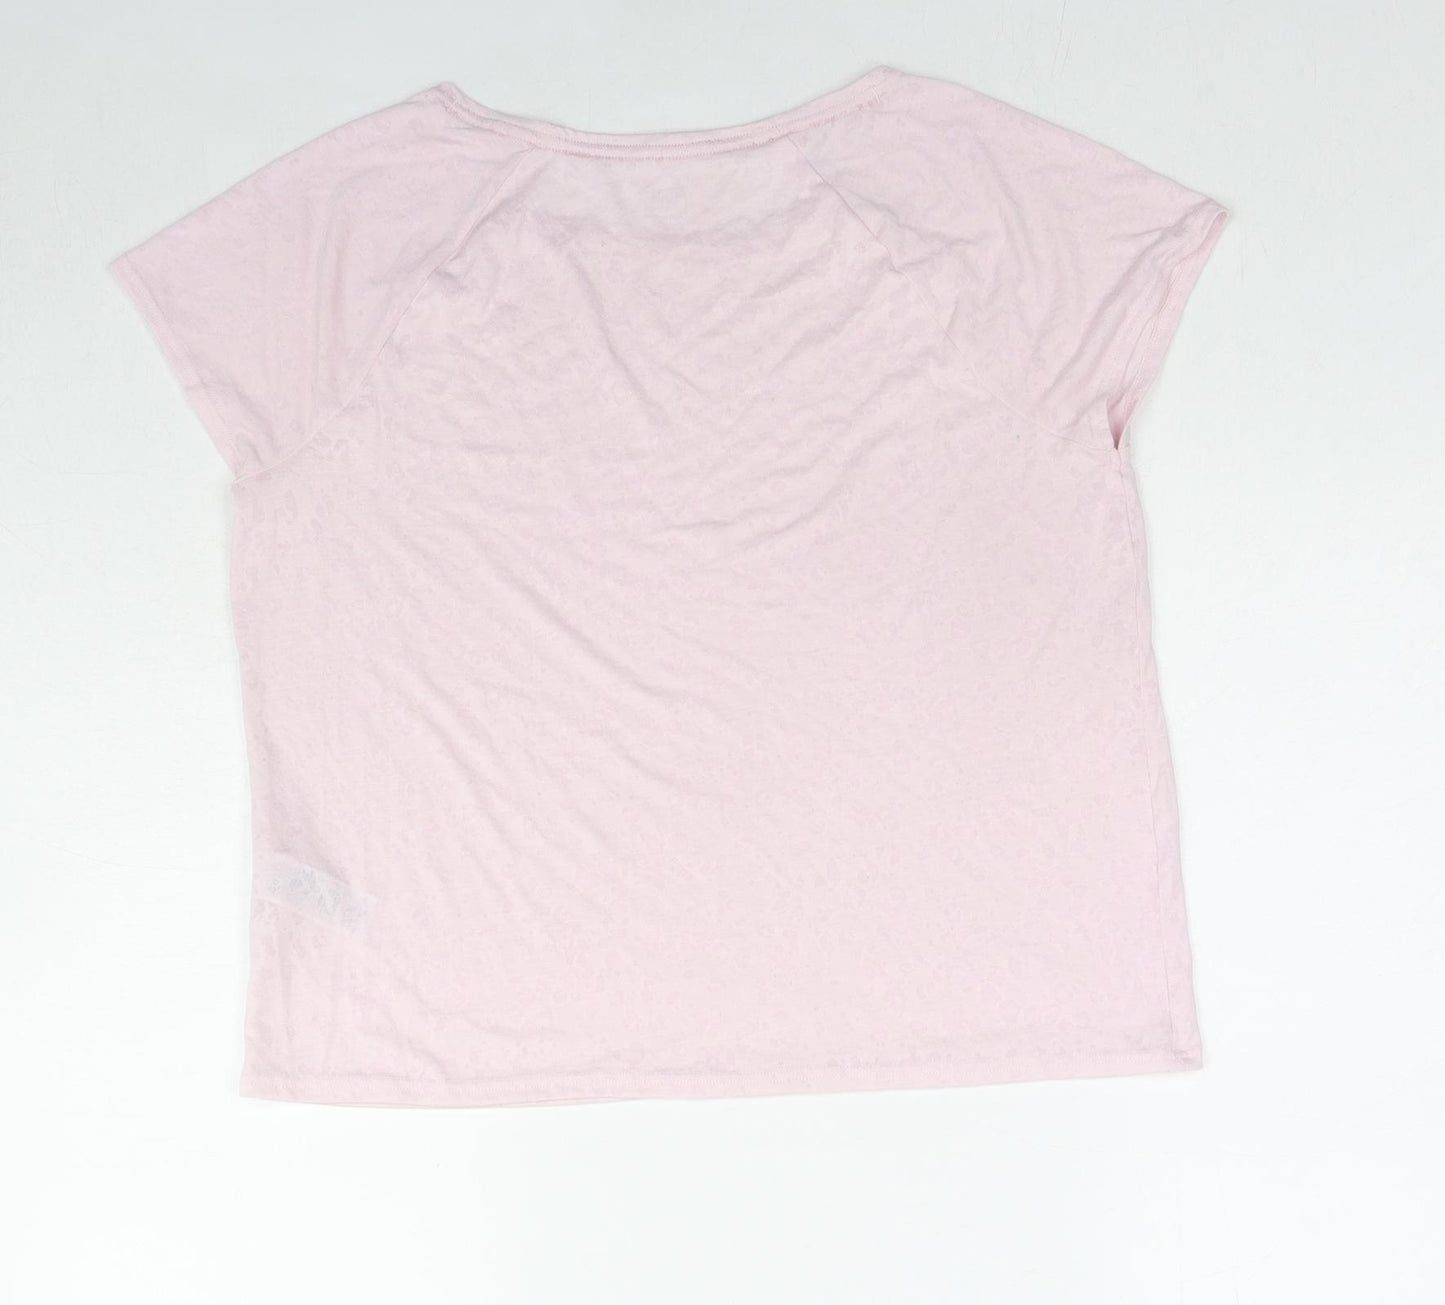 GOODMOVE Womens Pink Animal Print Polyester Basic T-Shirt Size 12 Round Neck